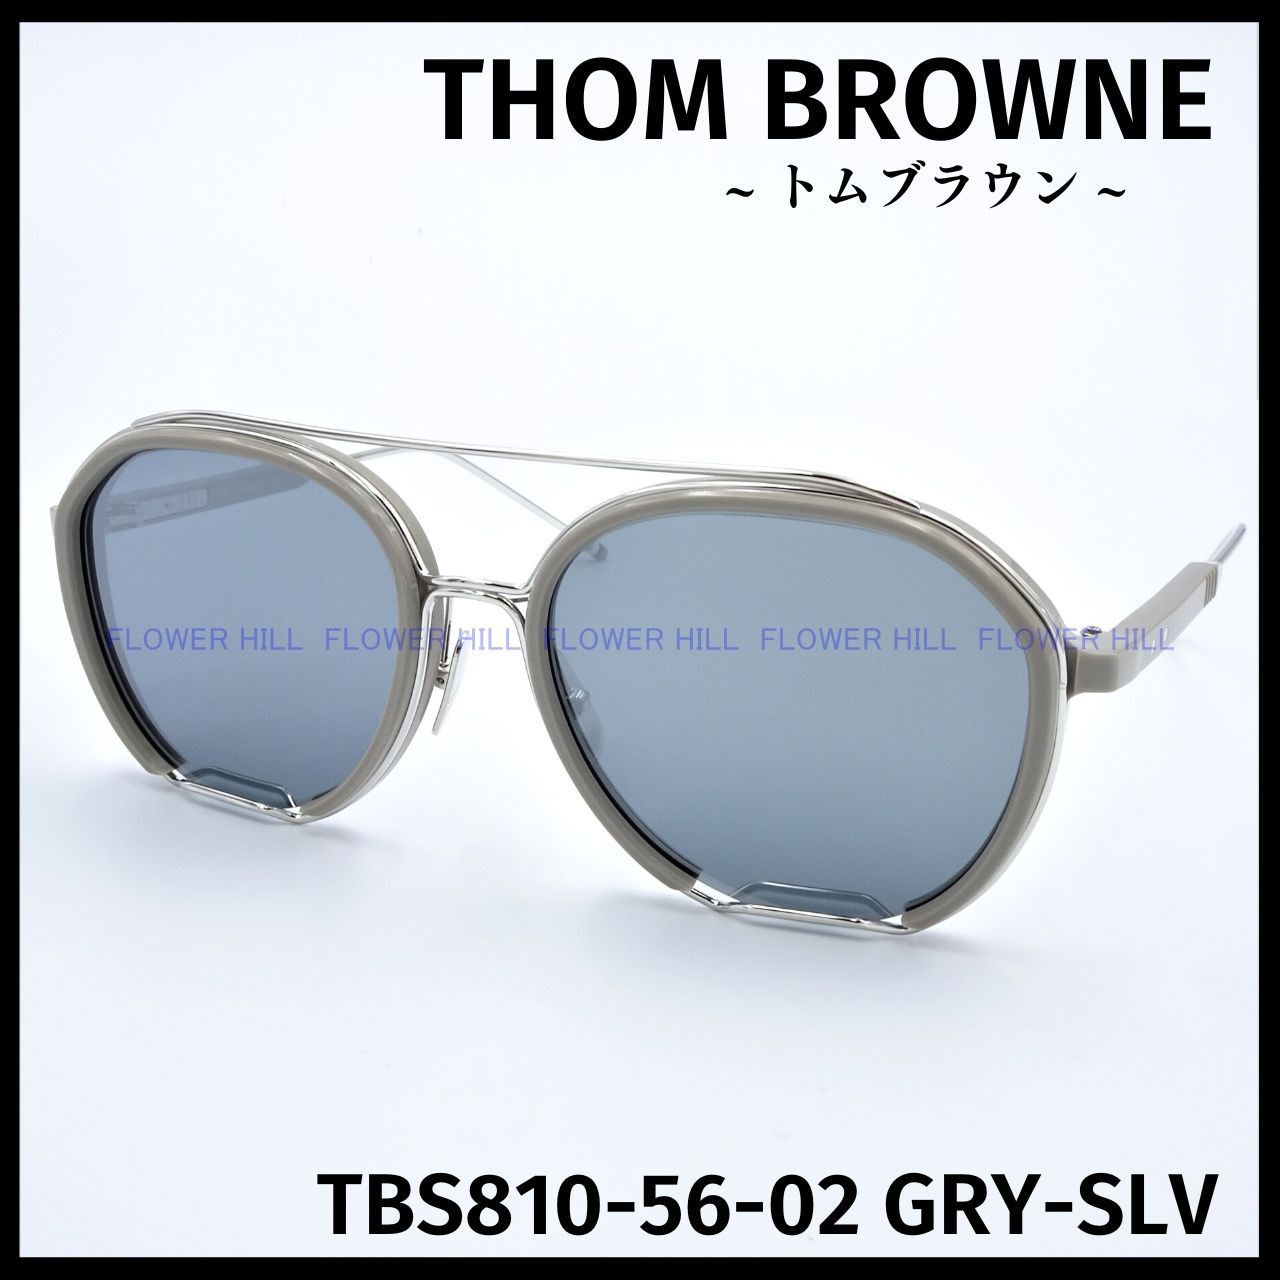 THOM BROWNE TBS810 サングラス グレー シルバー トムブラウン